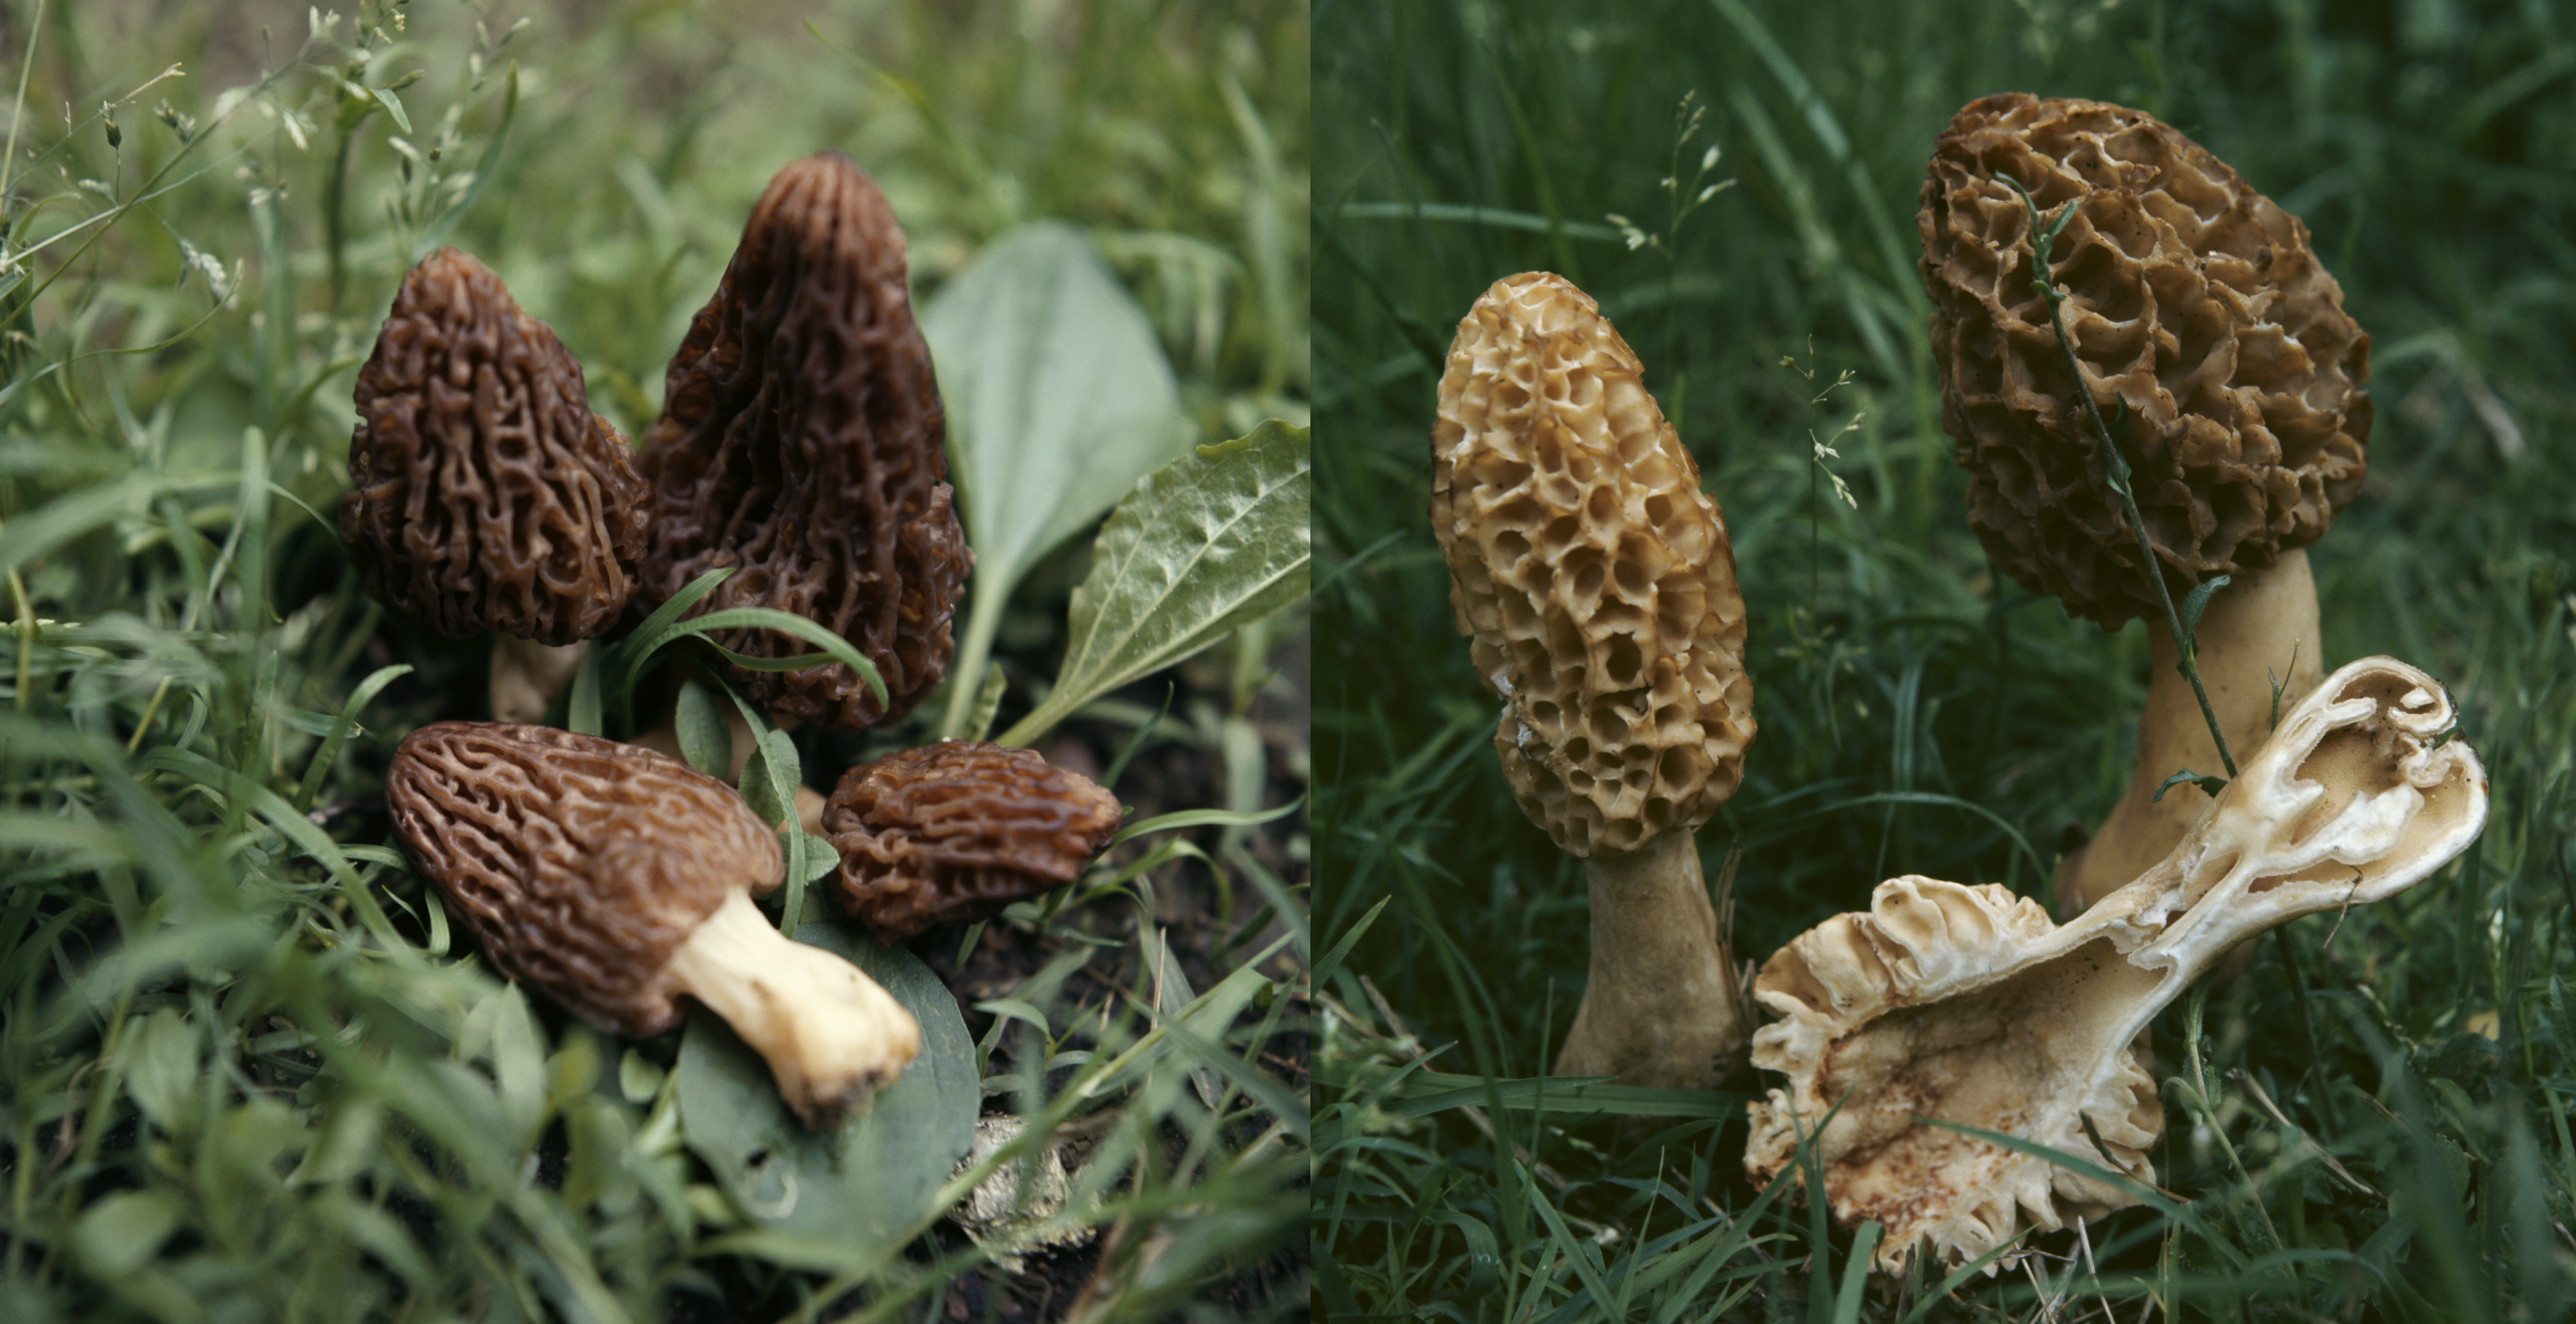 Real vs. False Morels: How To Tell the Wild Mushrooms Apart